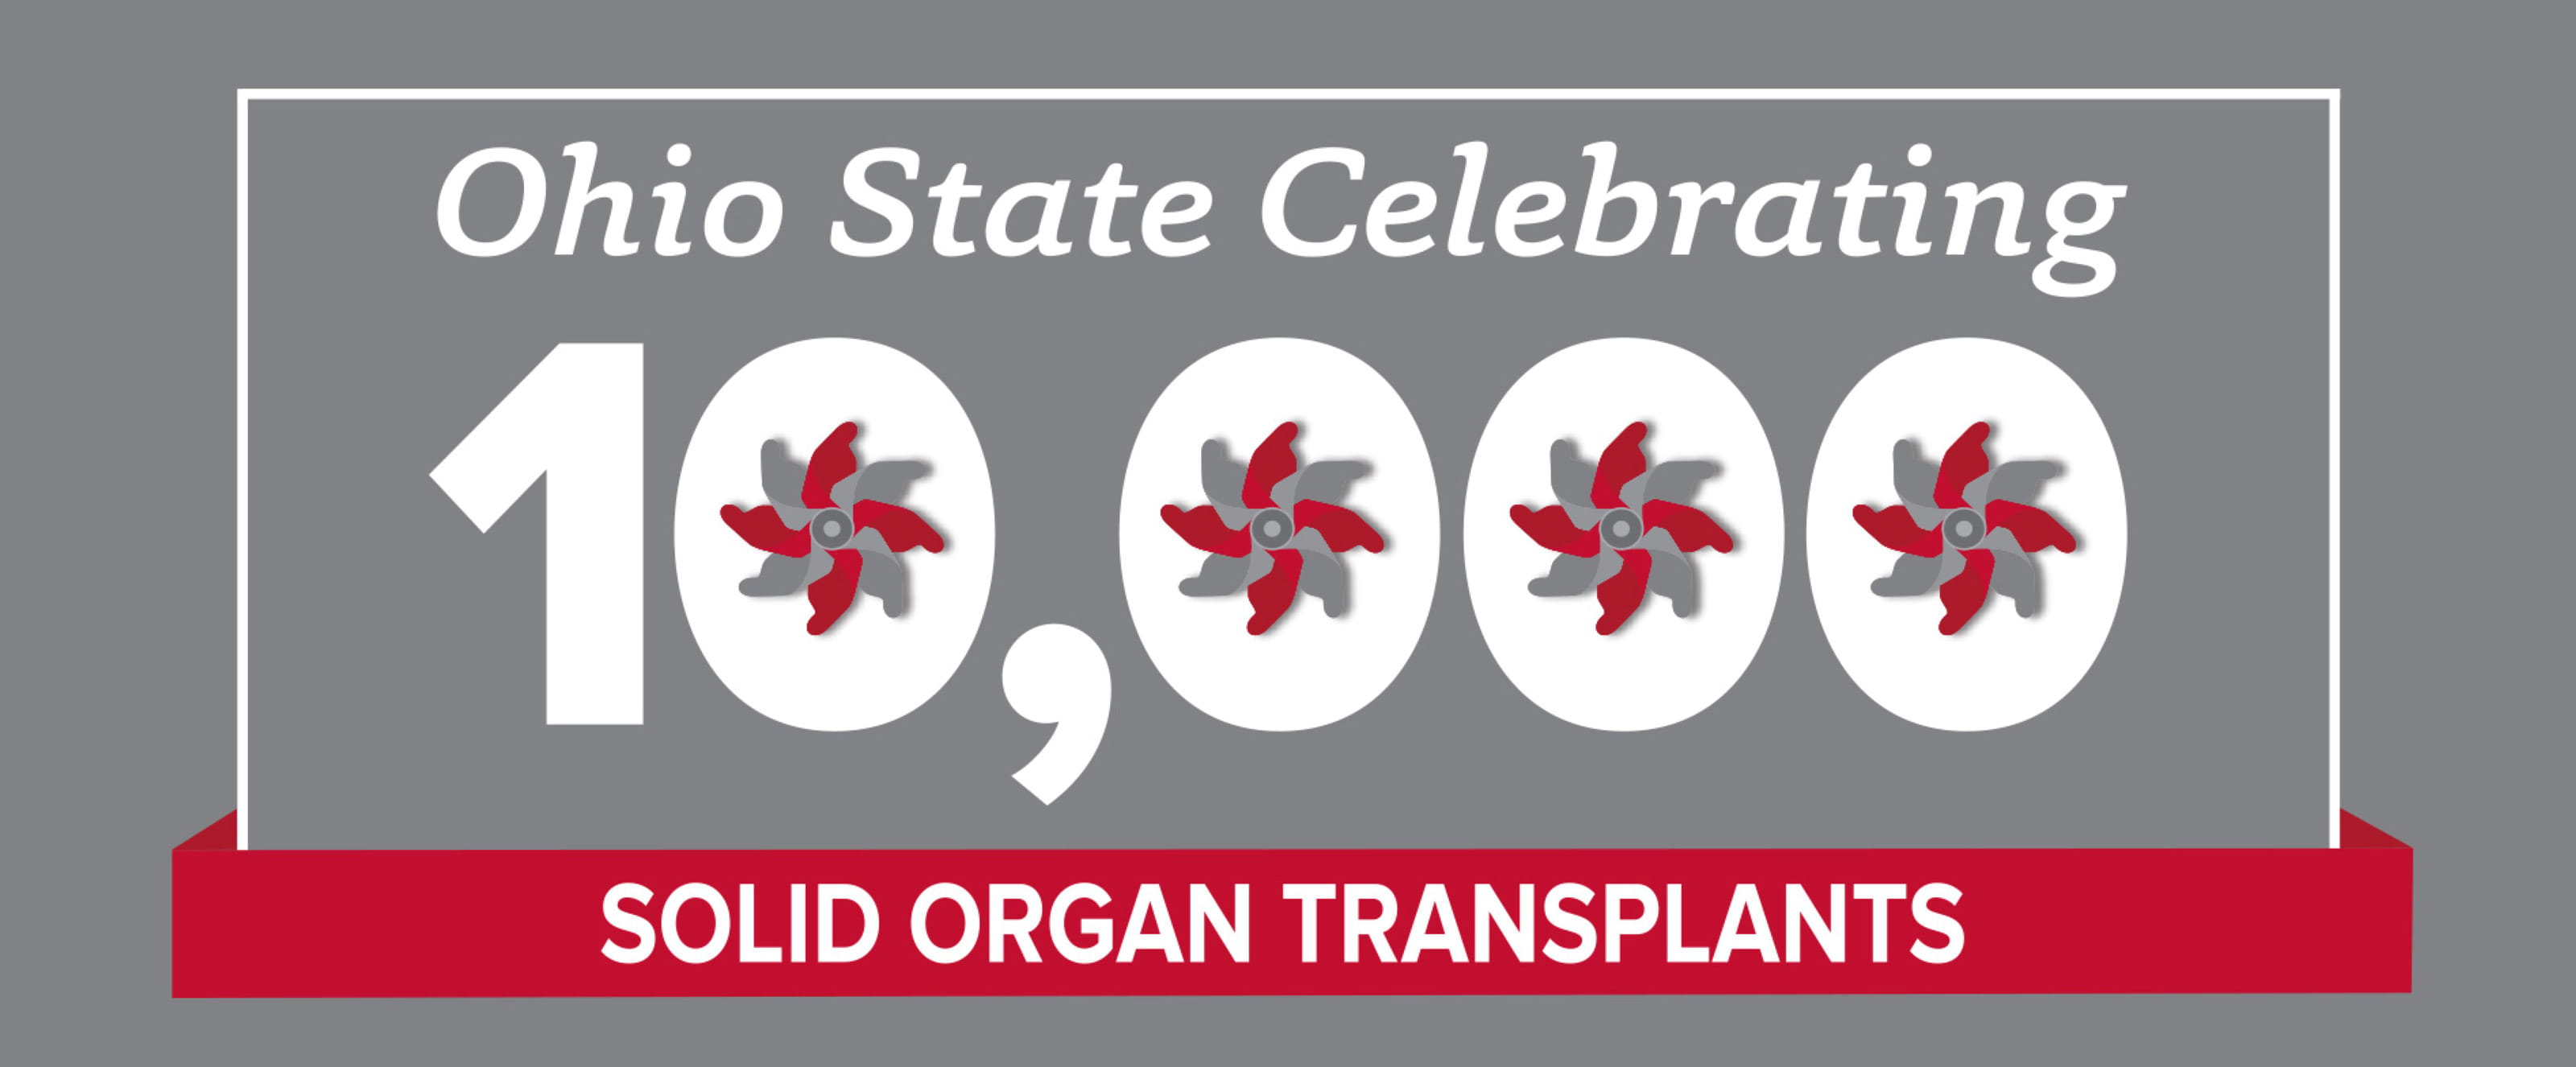 10000TransplantsGraphic